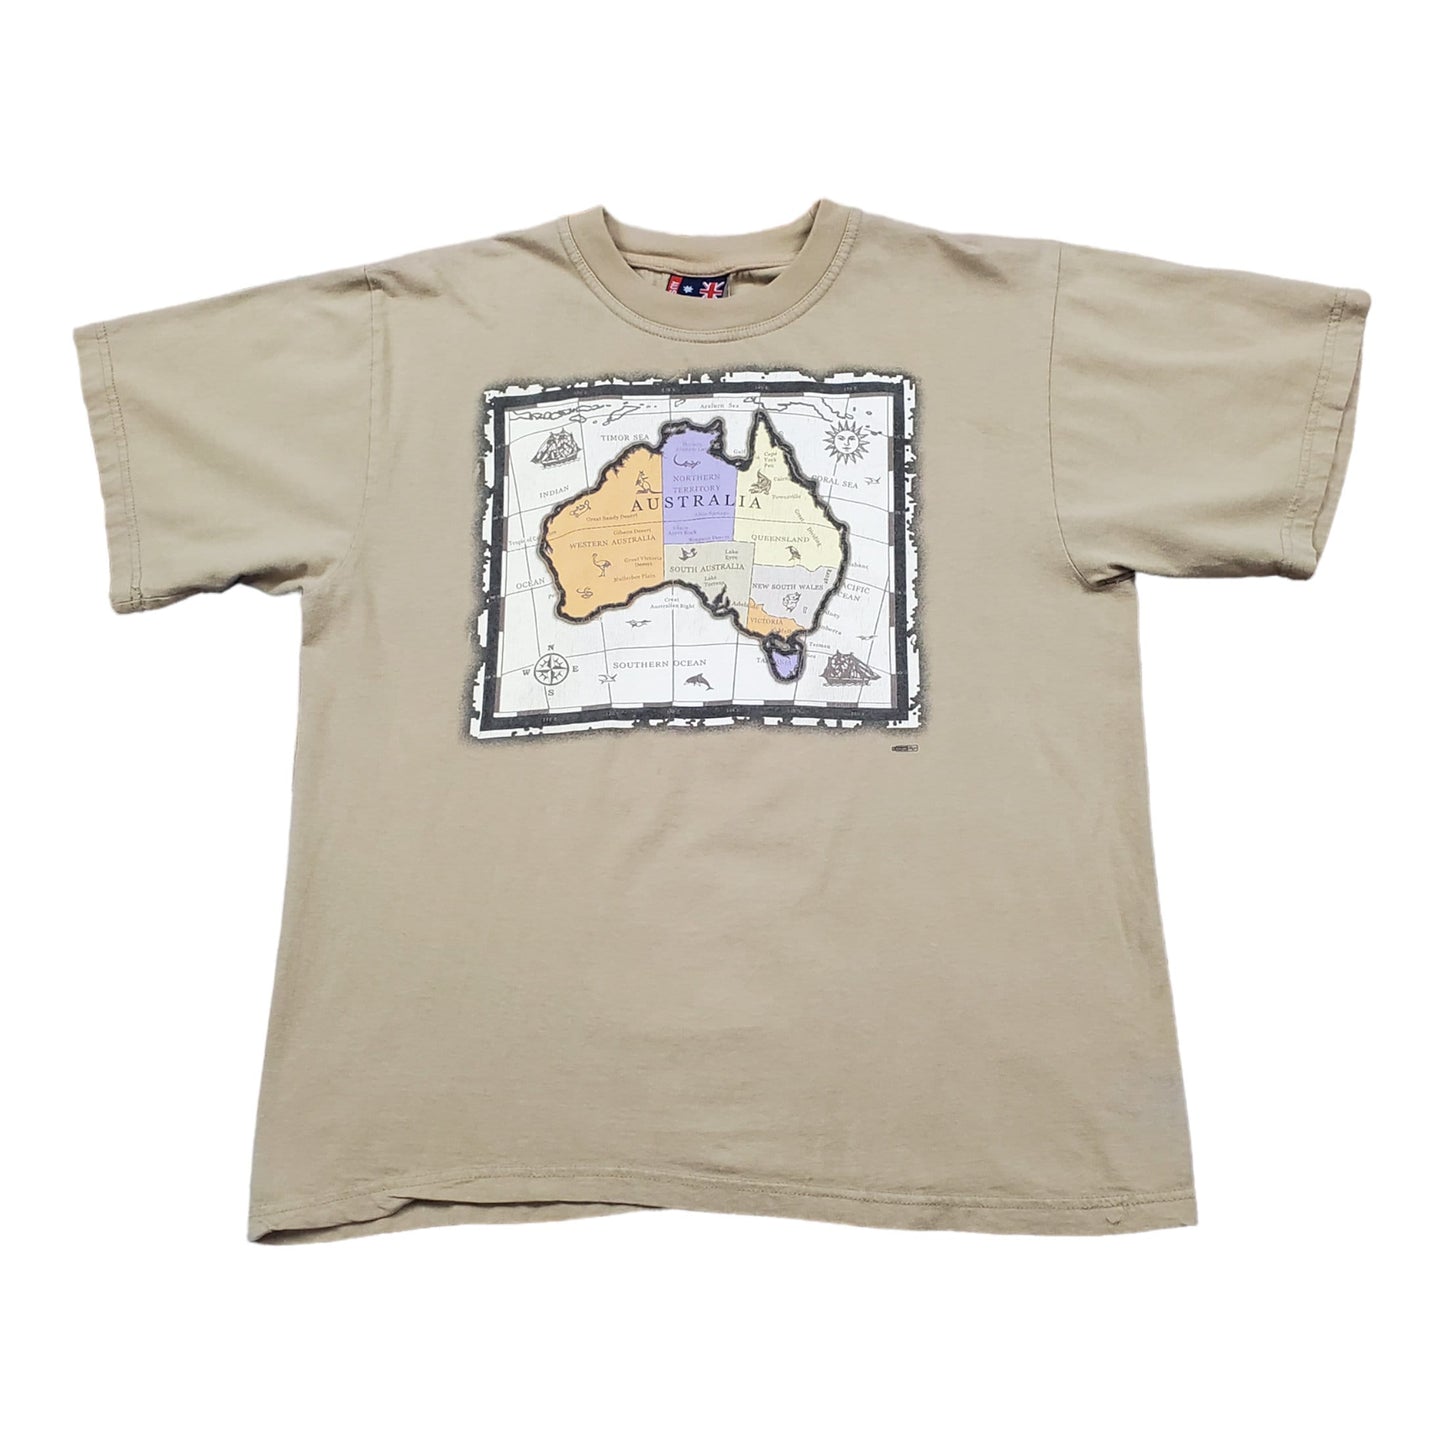 1990s/2000s Map of Australia T-Shirt Size L